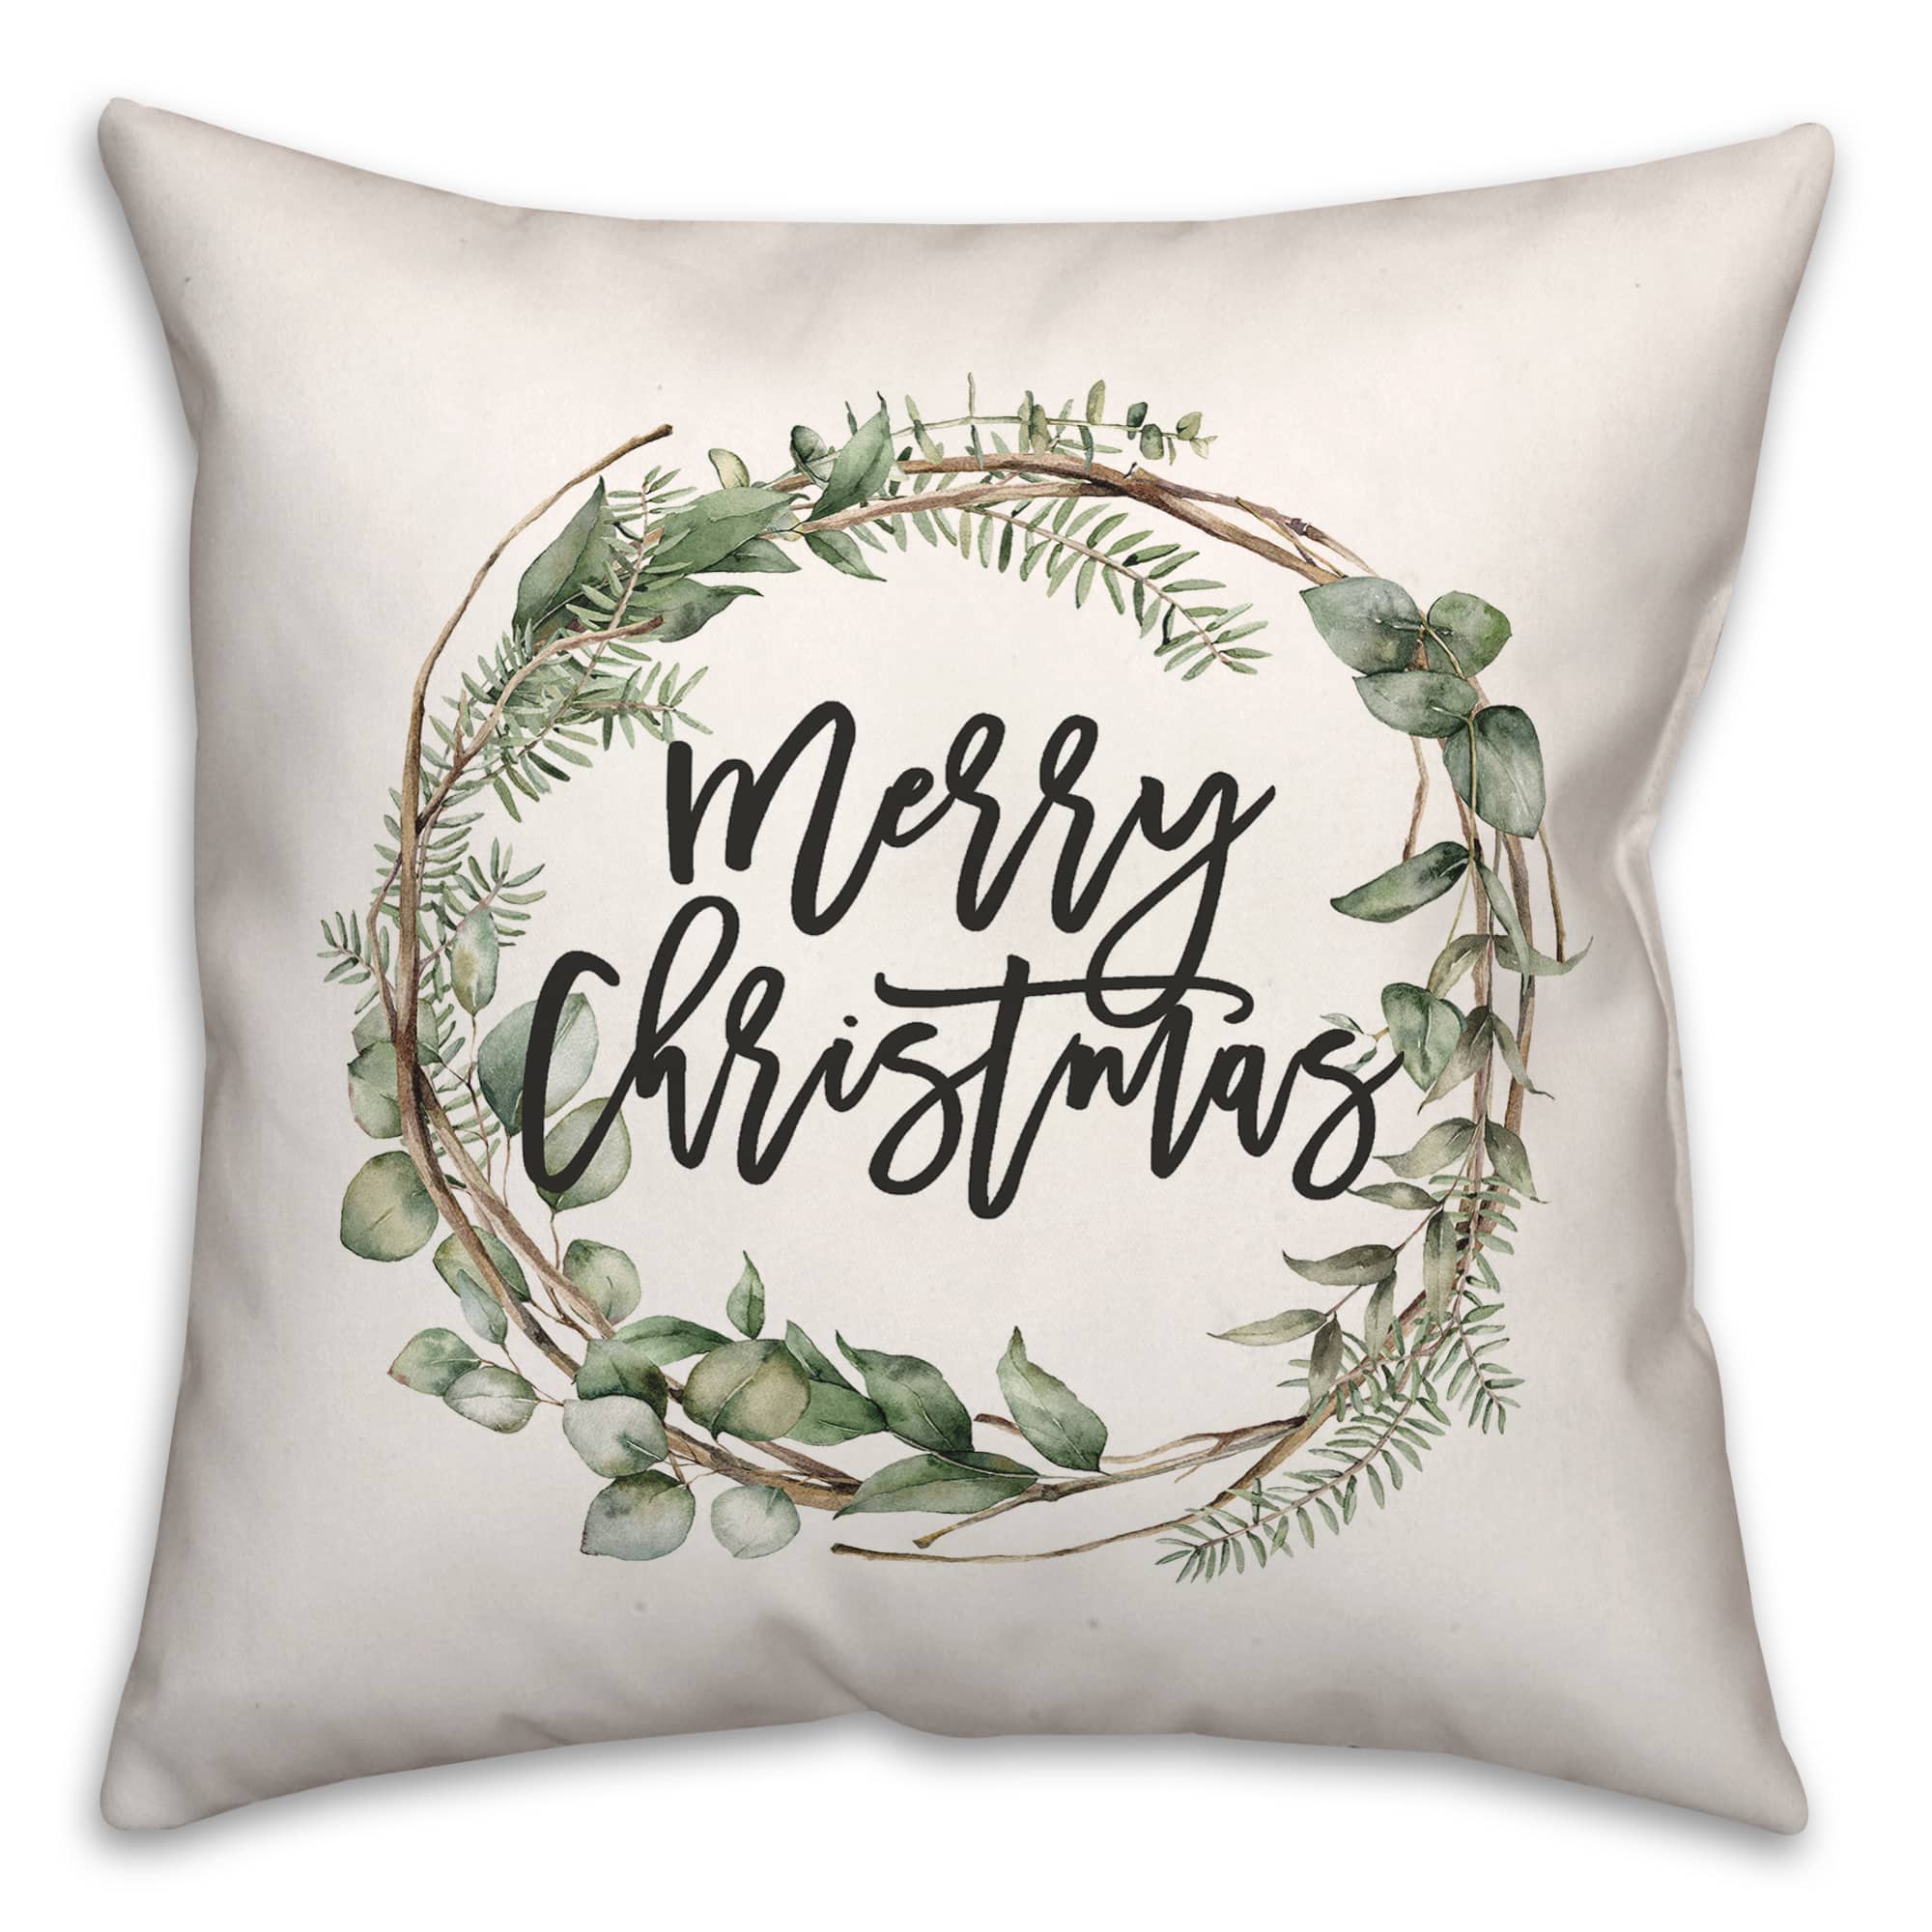 Merry Christmas Wreath Throw Pillow